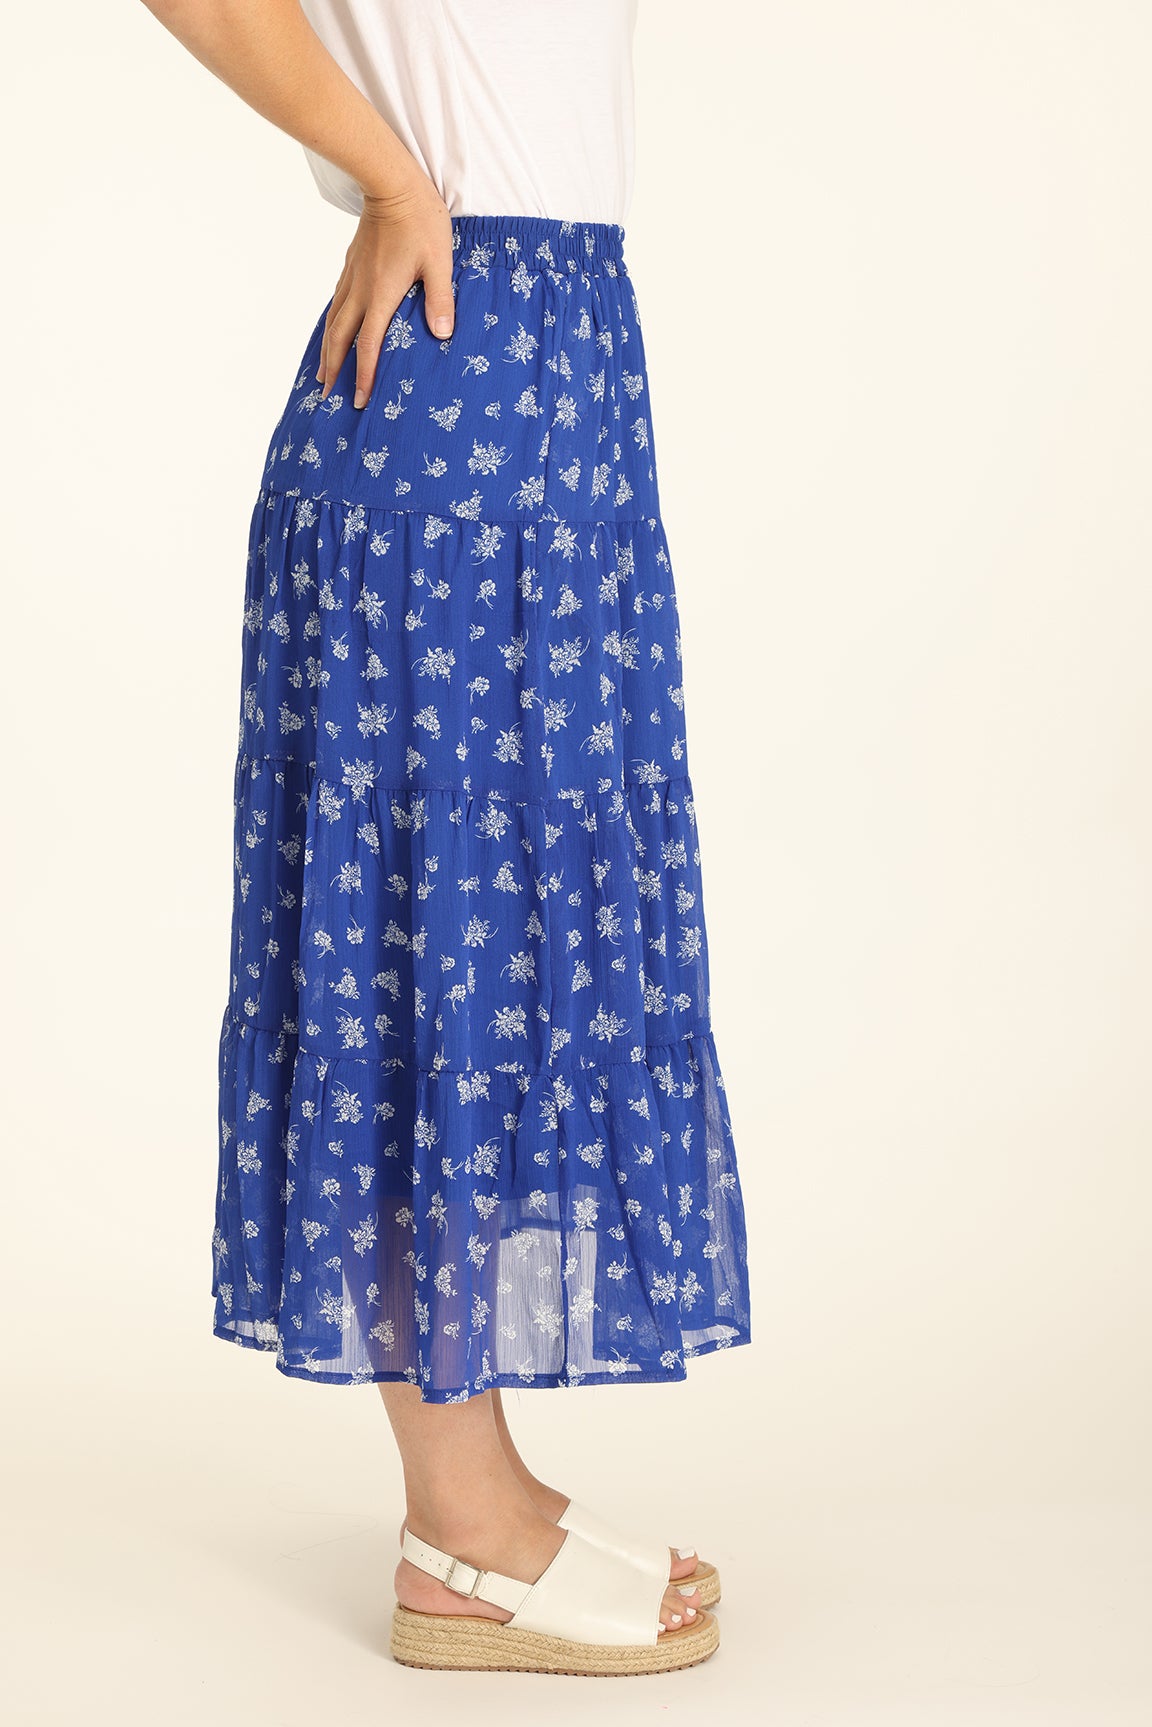 Printed Yoryu Chiffon Skirt in Blue | Caroline Eve